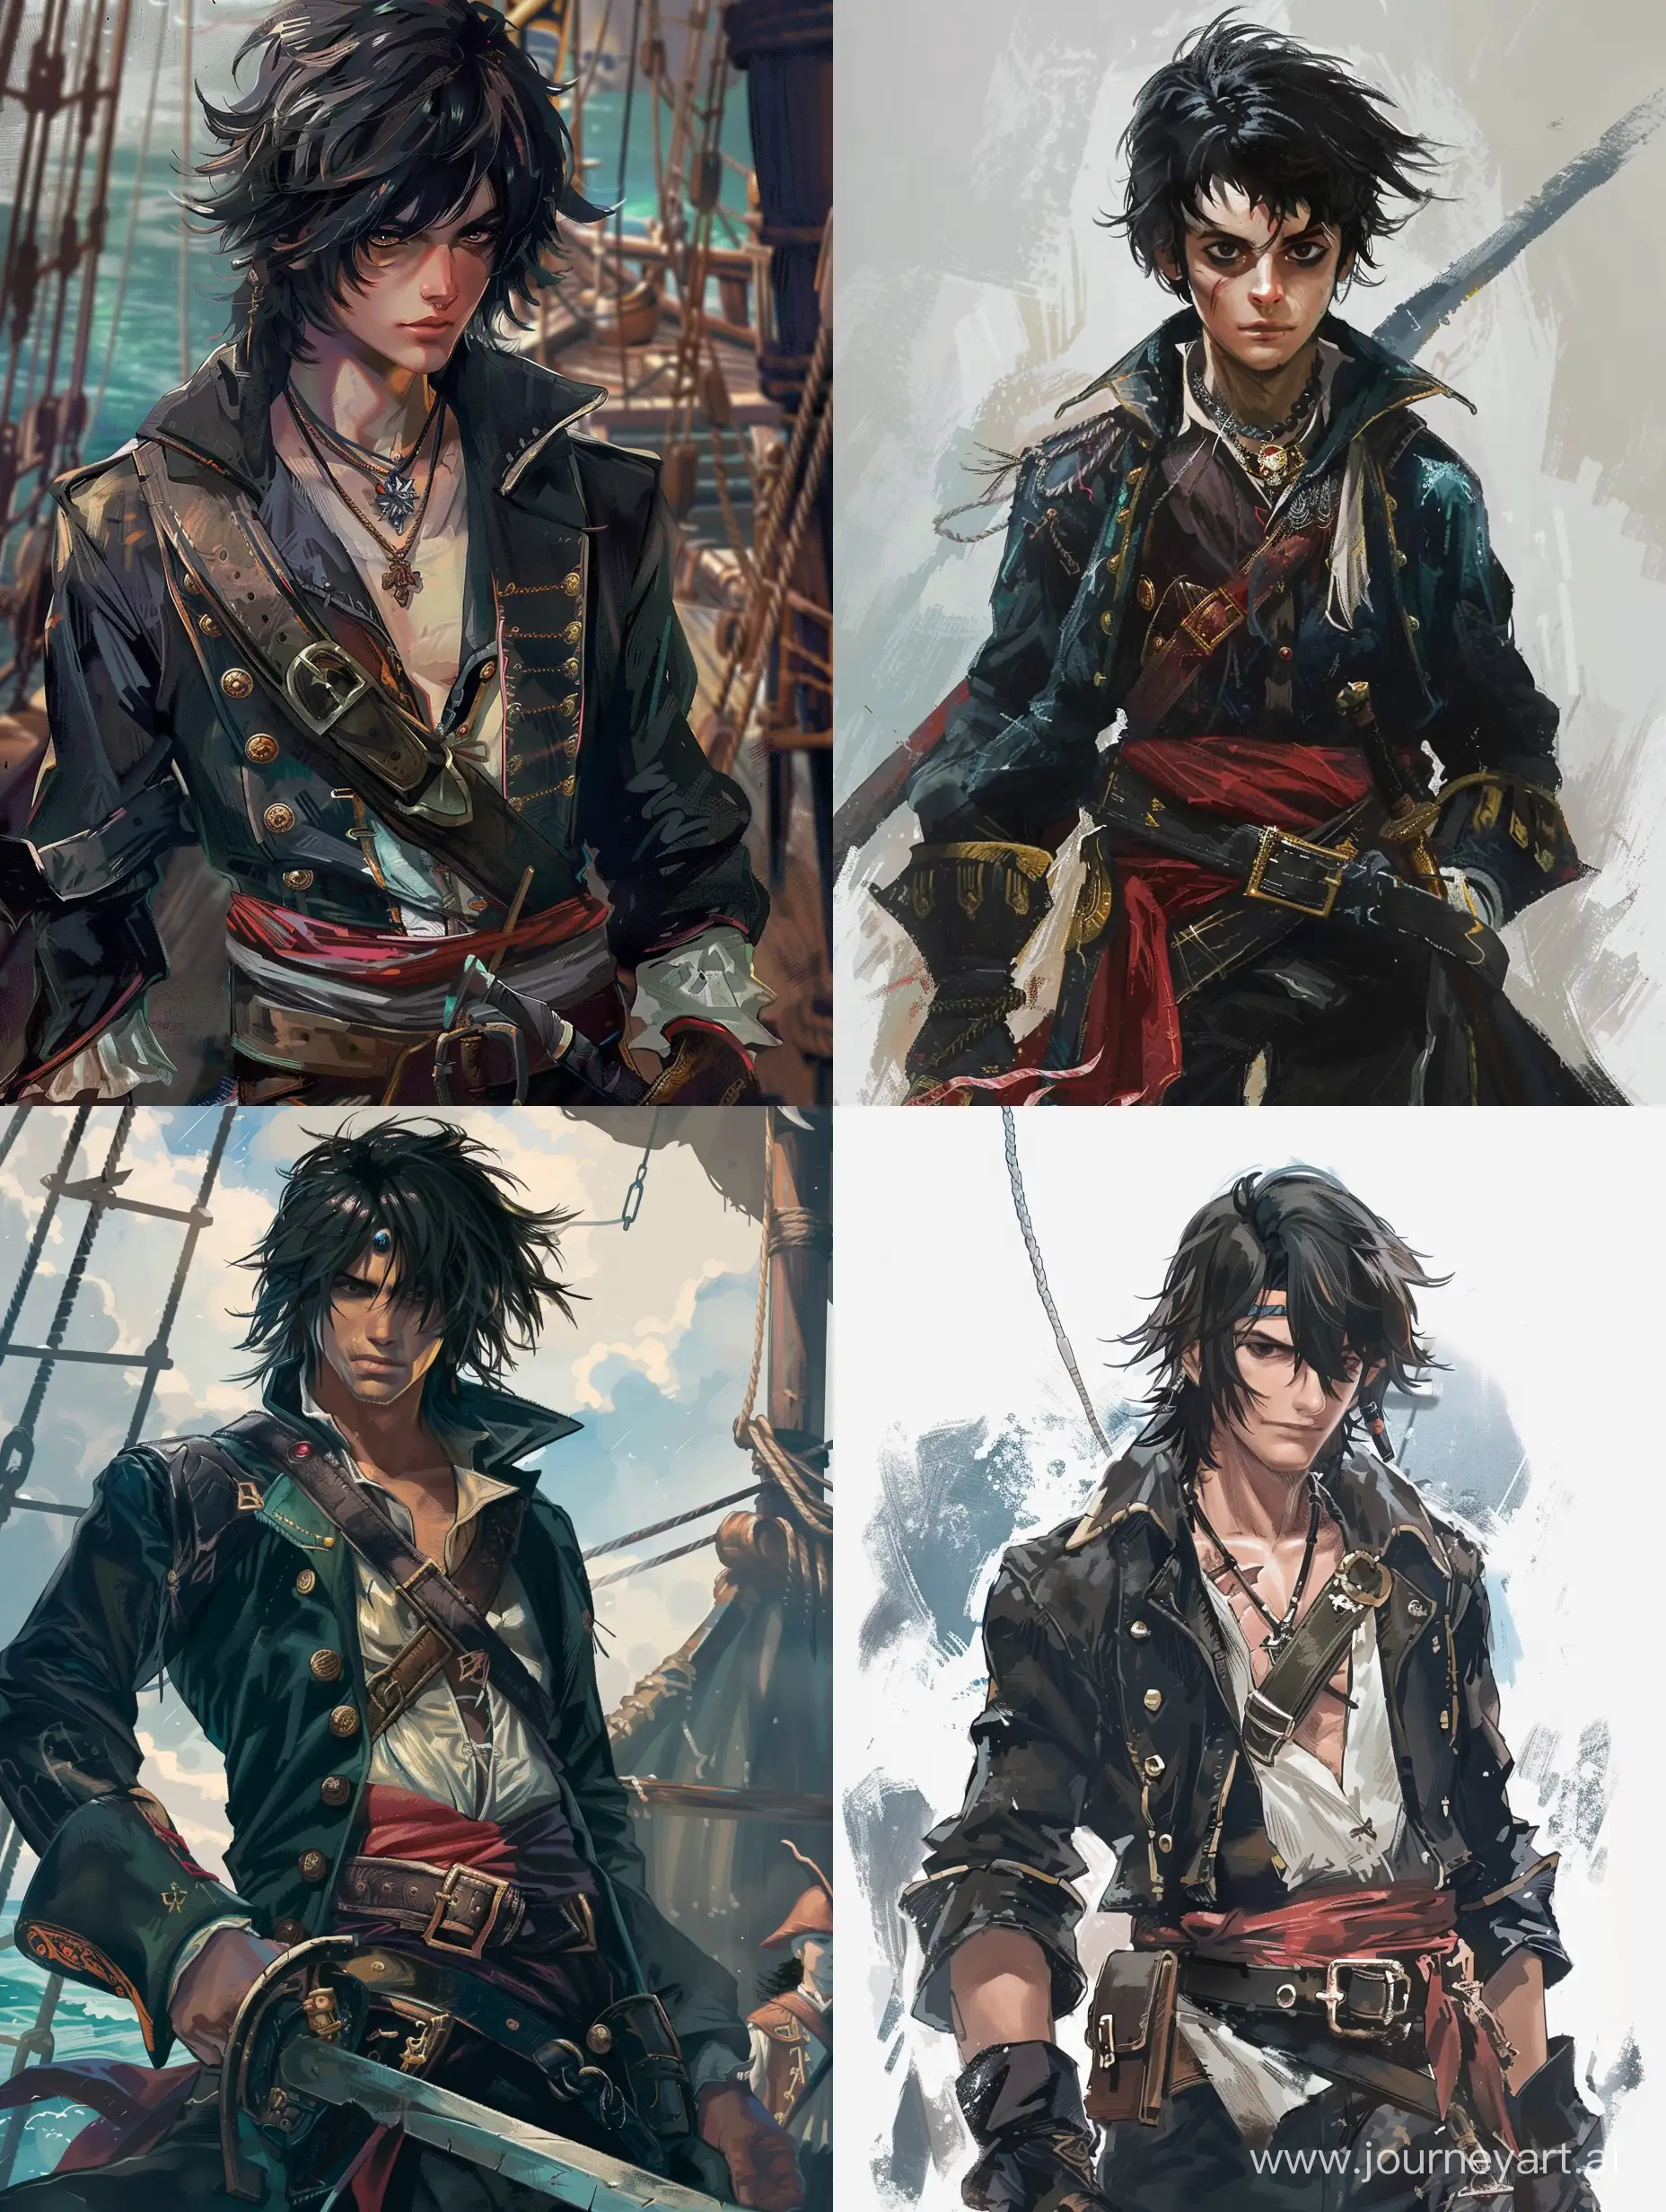 Rogue-Pirate-Balt-Dark-Fantasy-Mercenary-with-Black-Hair-and-Saber